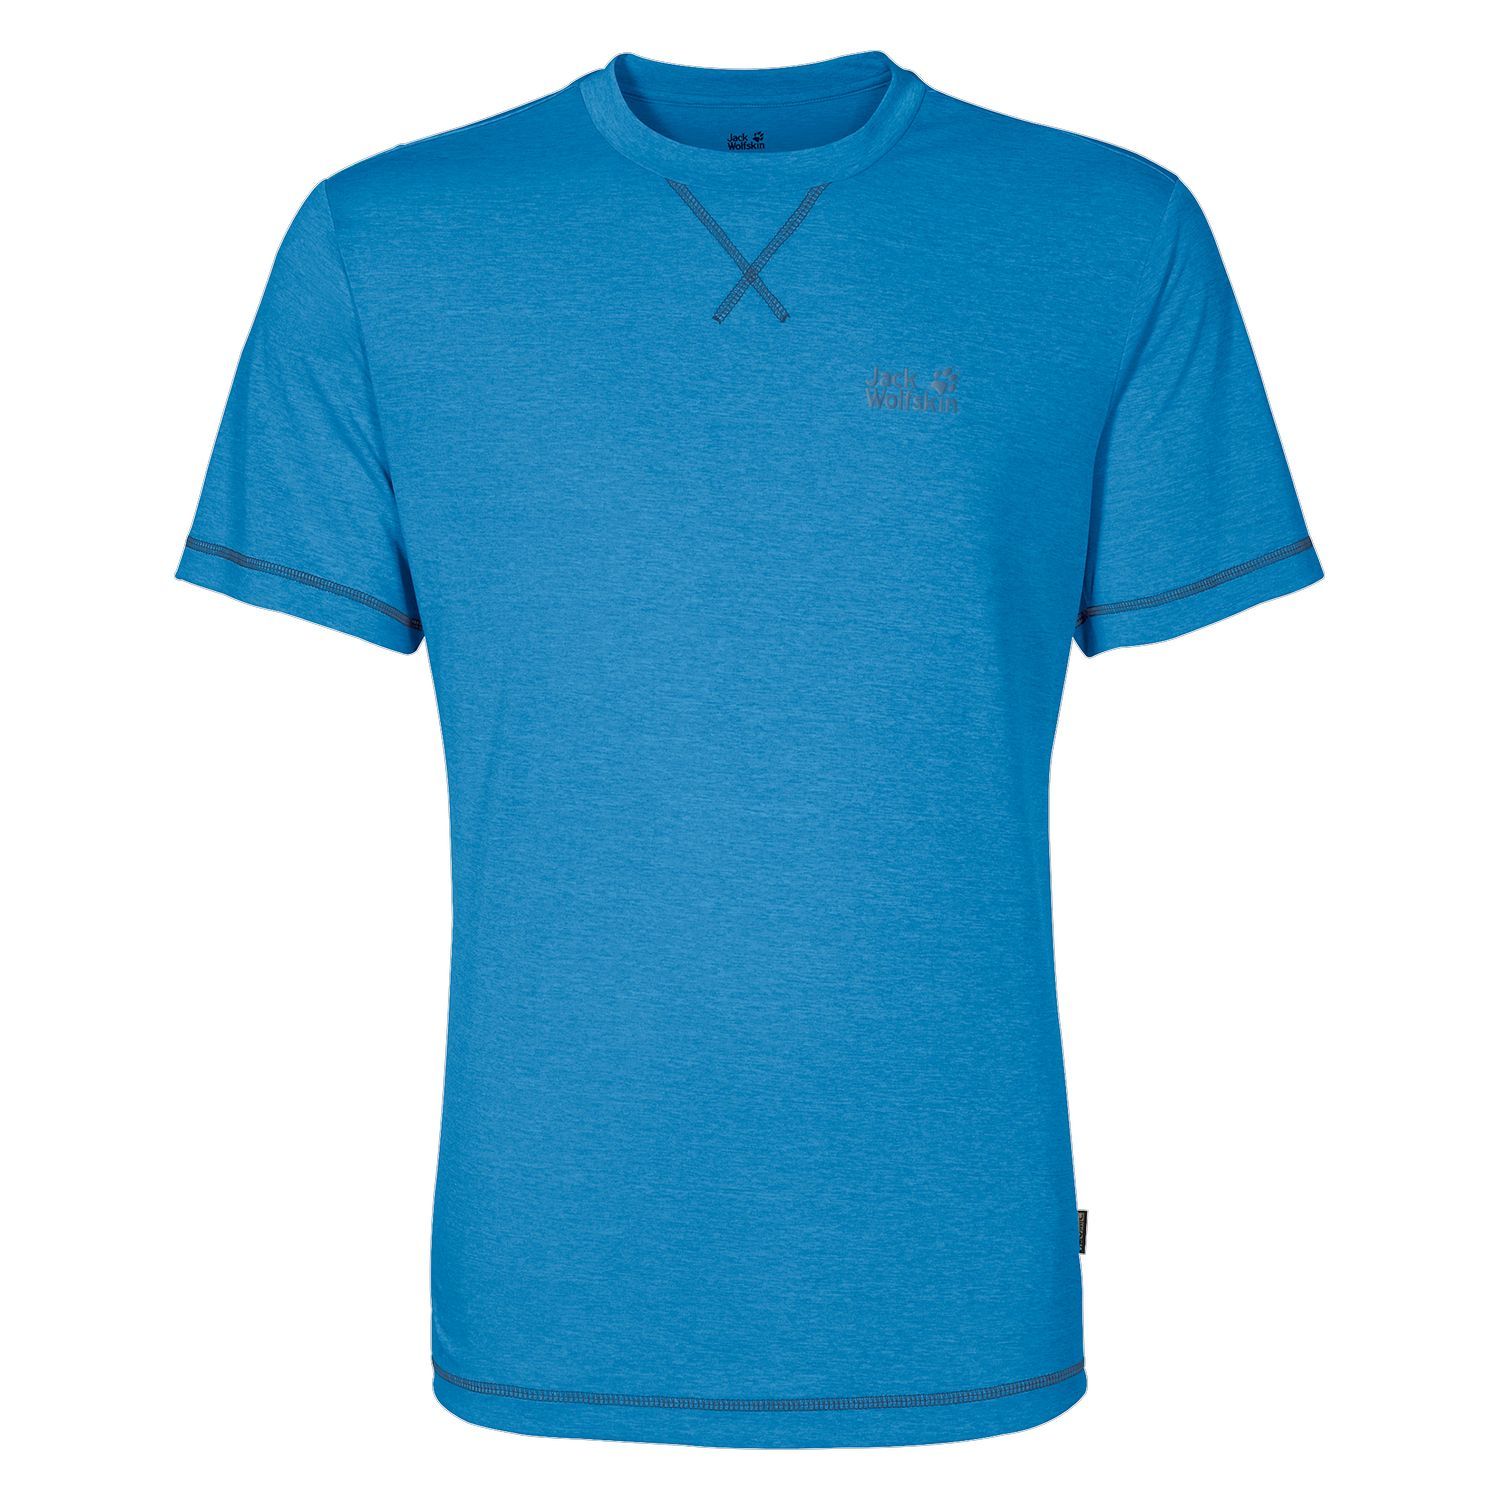 Jack Wolfskin Crosstrail T-Shirt - Mens (Brilliant Blue)